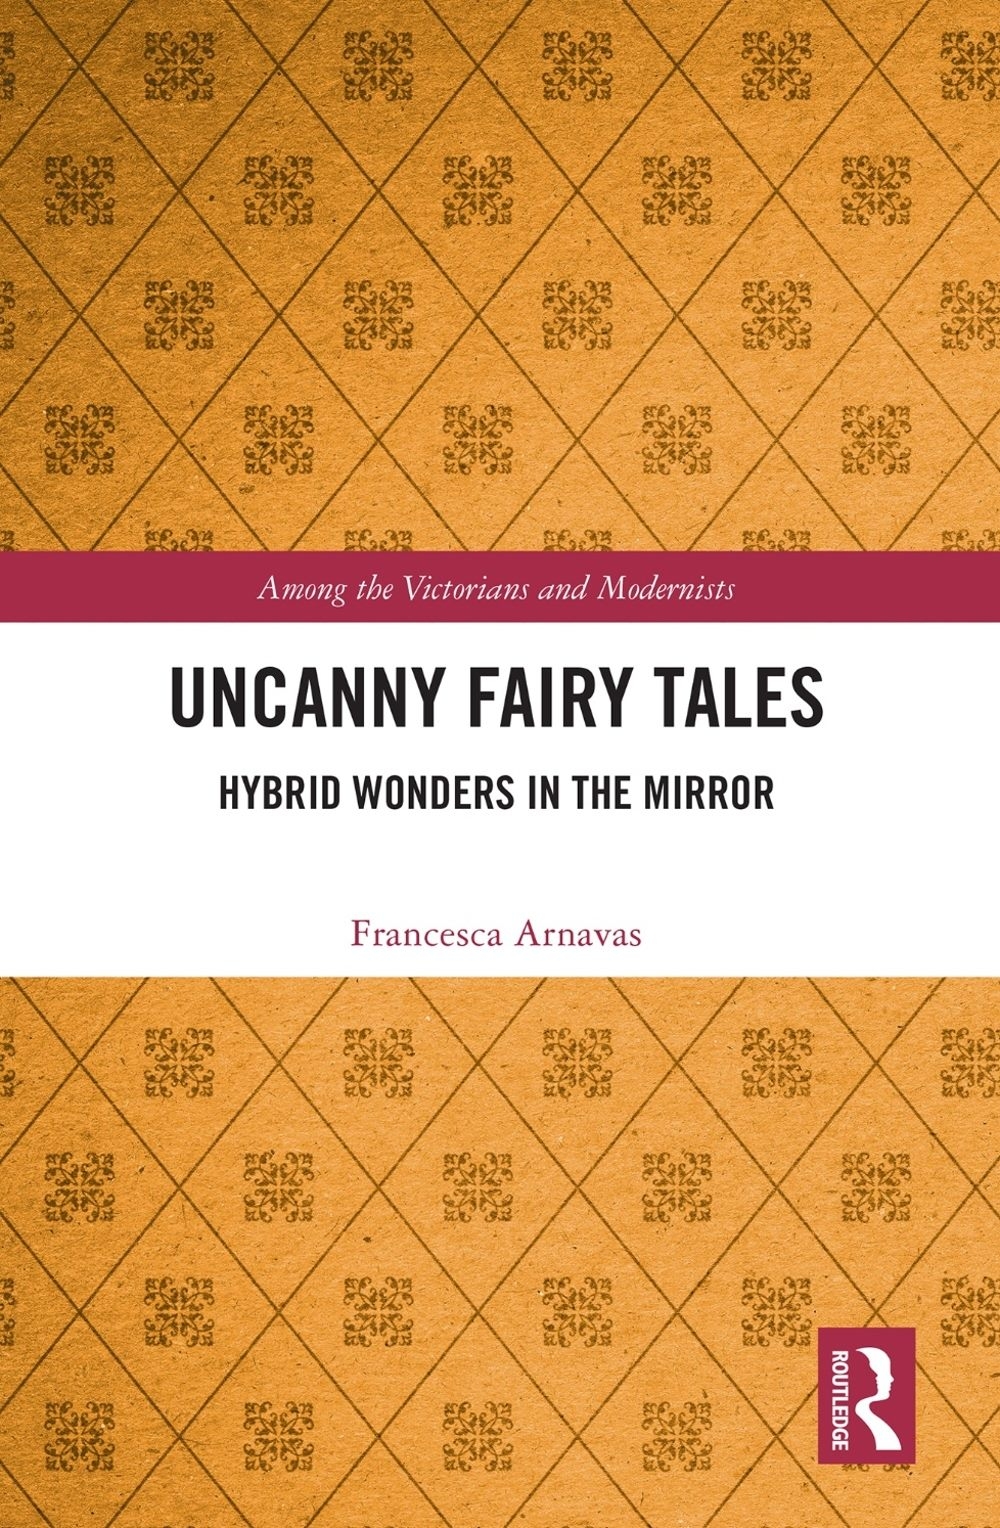 Uncanny Fairy Tales: Hybrid Wonders in the Mirror